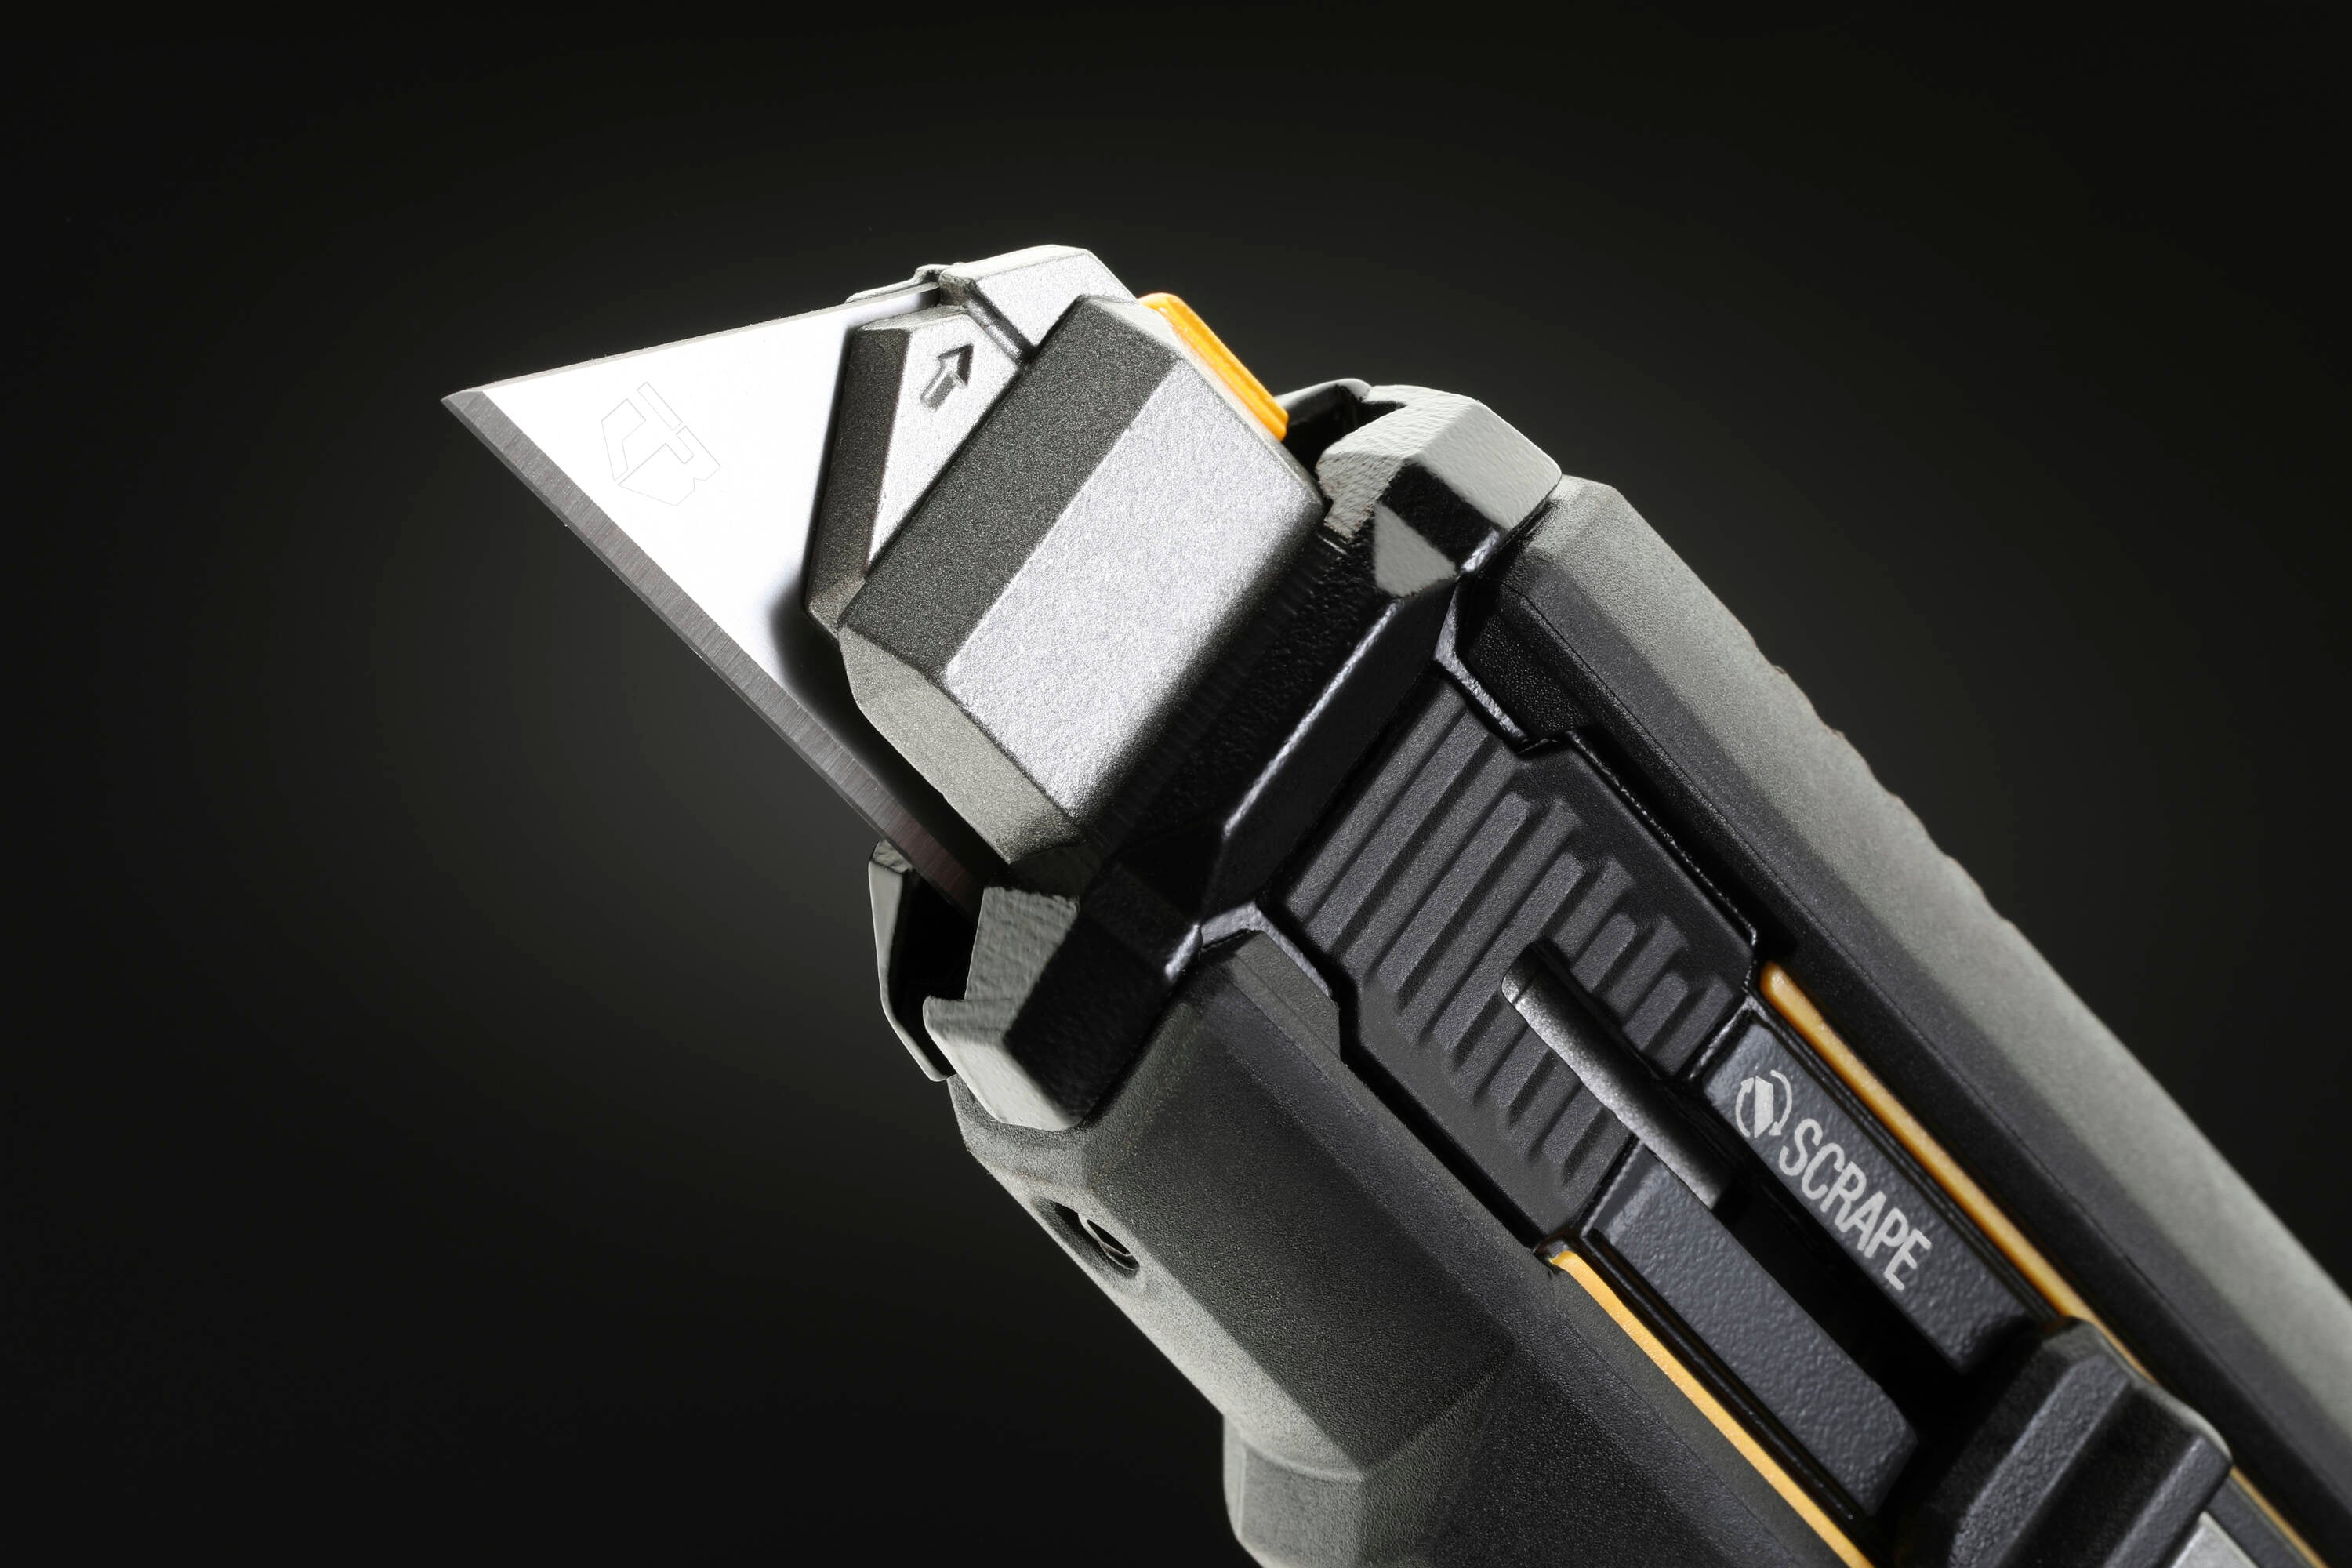 NTD toughbuilt scraper utility knife. I love this brand! : r/Tools